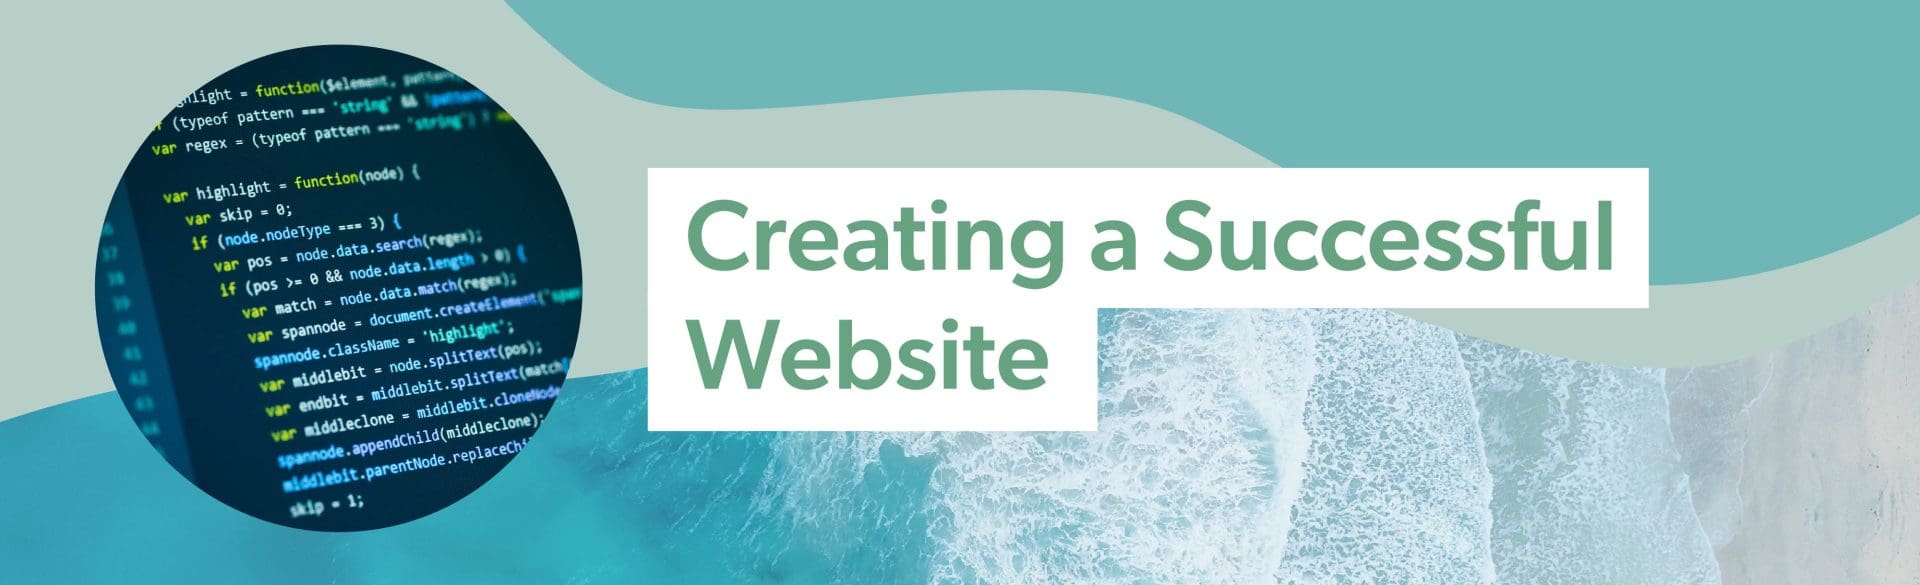 Creating a Successful Website